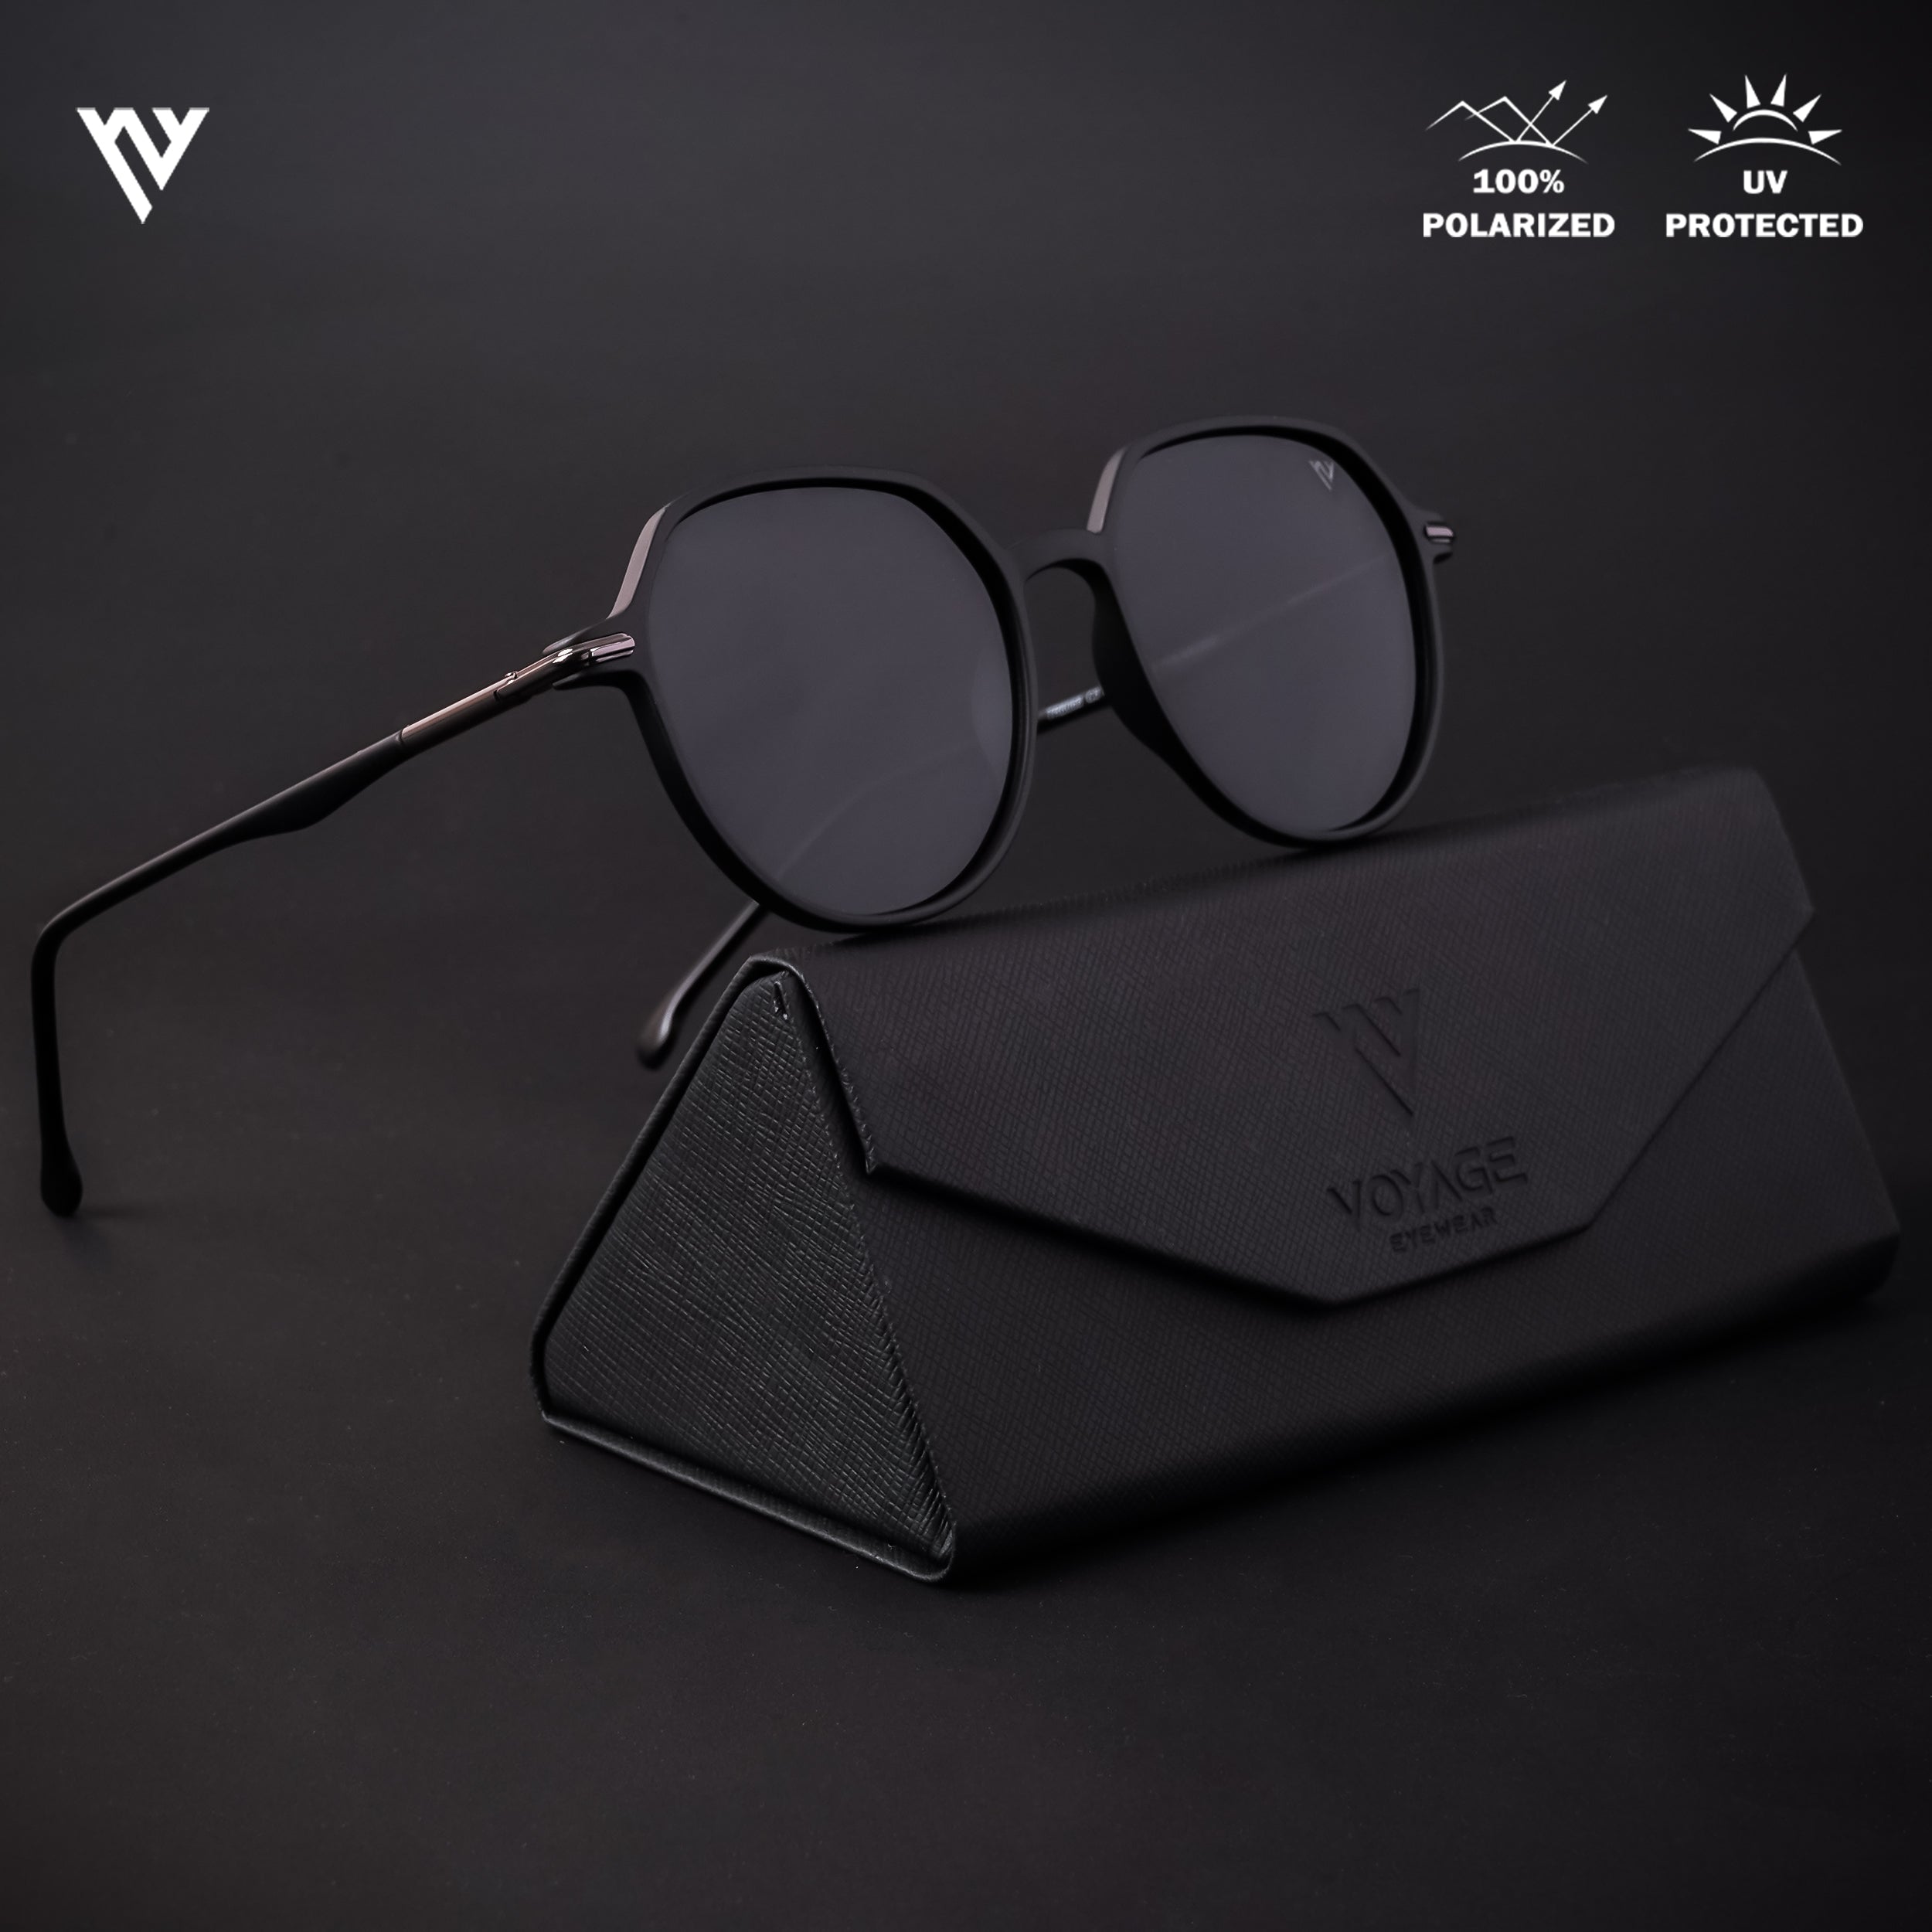 Voyage Exclusive Matt Black Polarized Round Sunglasses for Men & Women - PMG4299